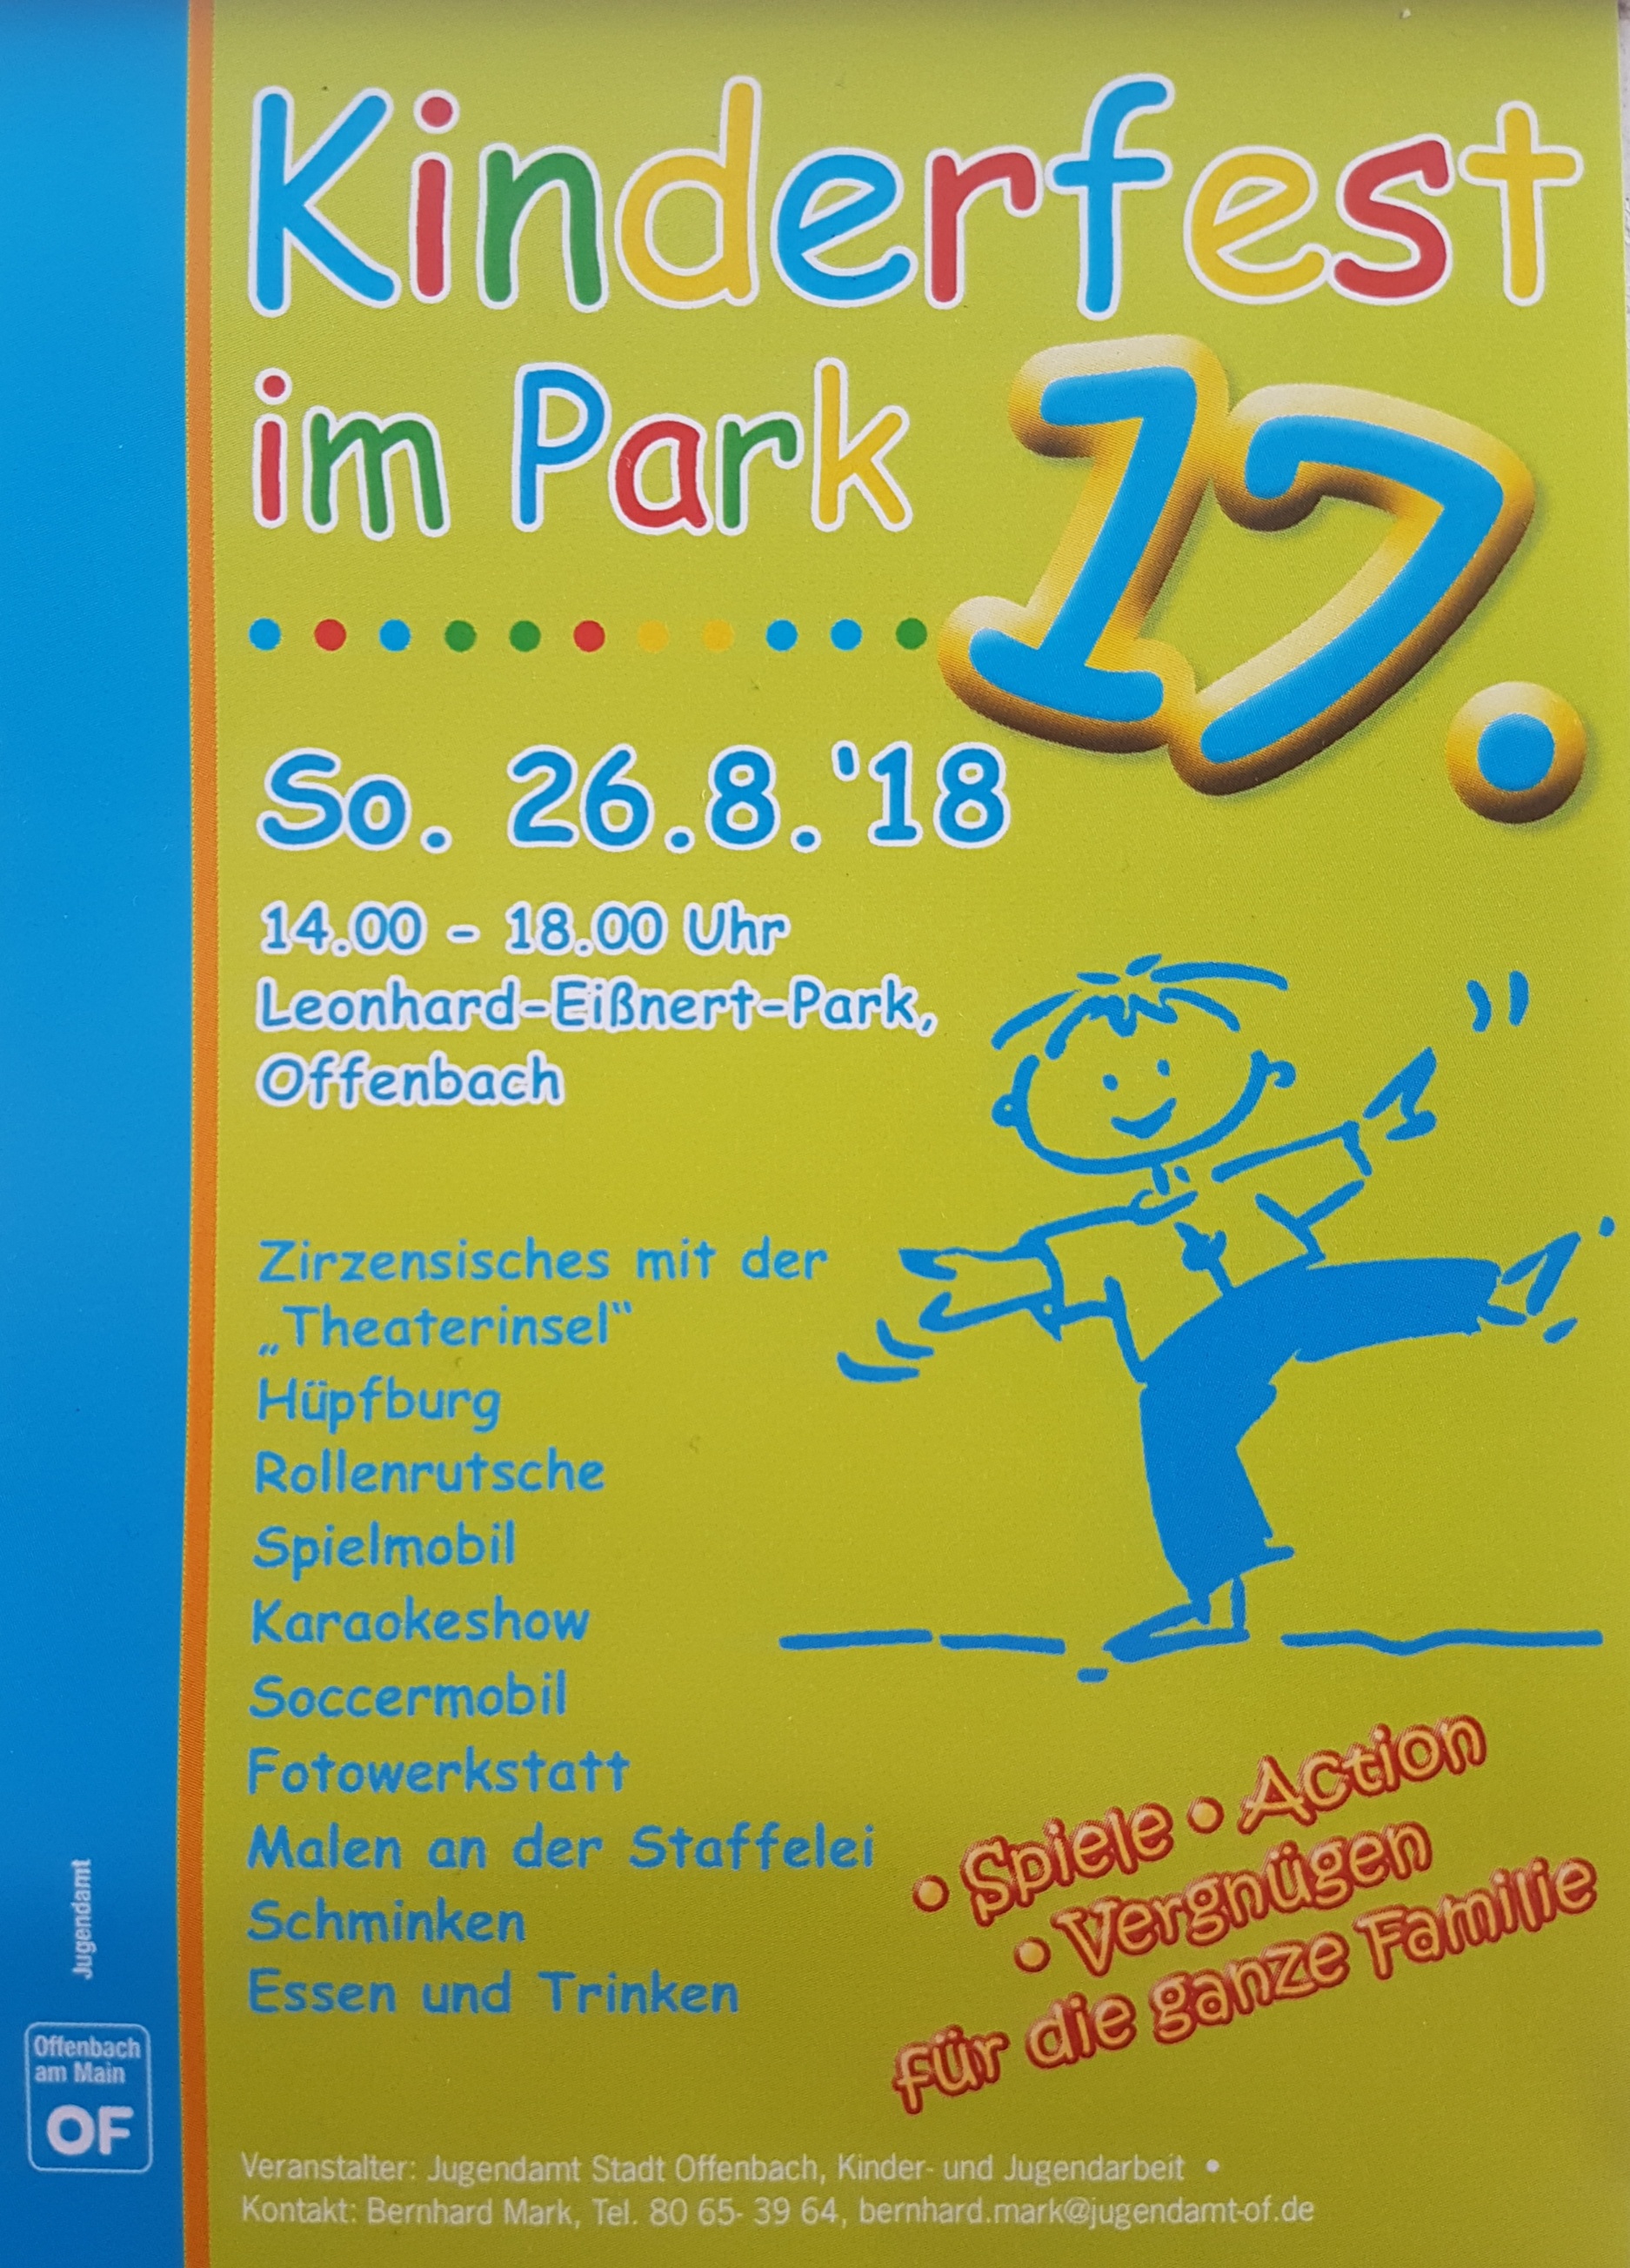 Kinderfest im Park